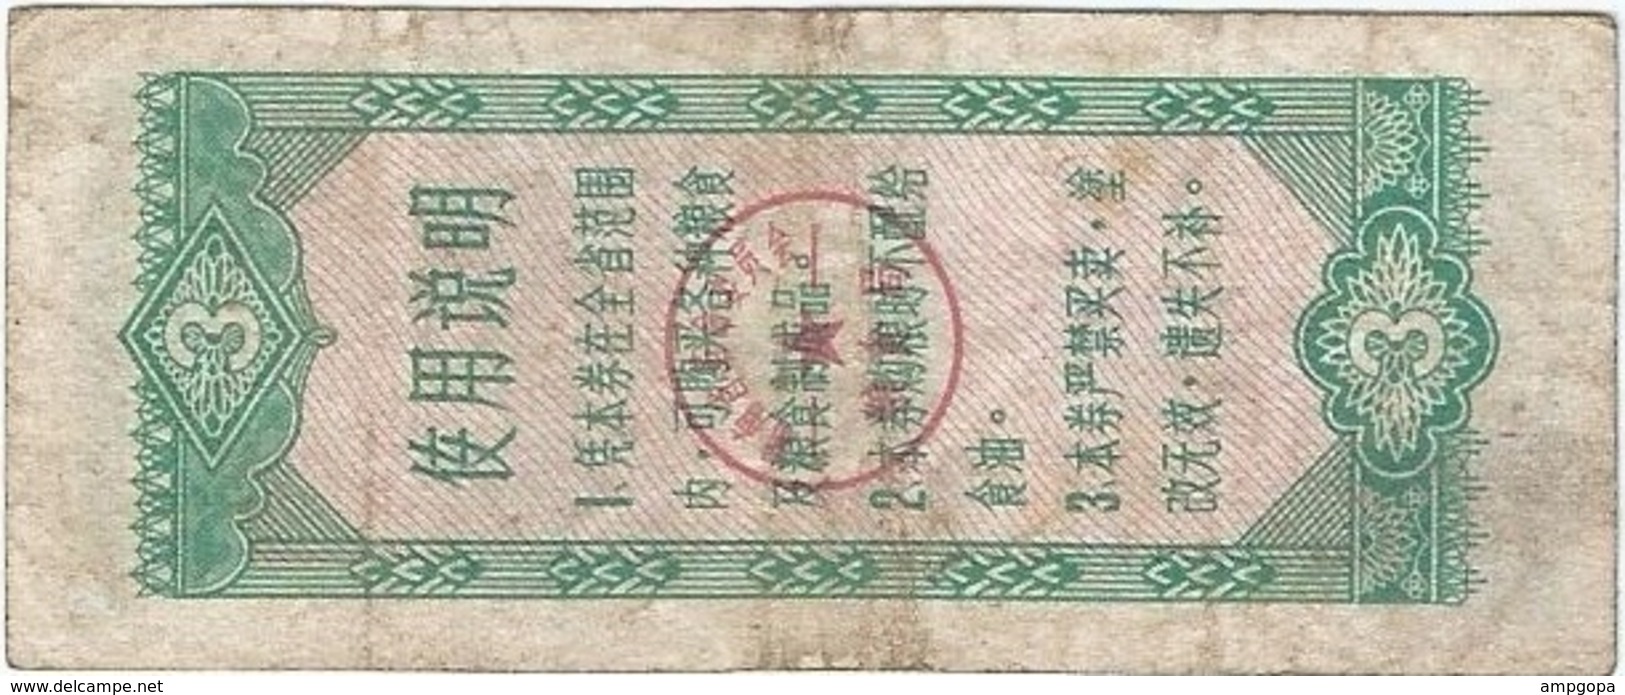 China 3 Jin Hunan 1978 Ref 373-3 - China